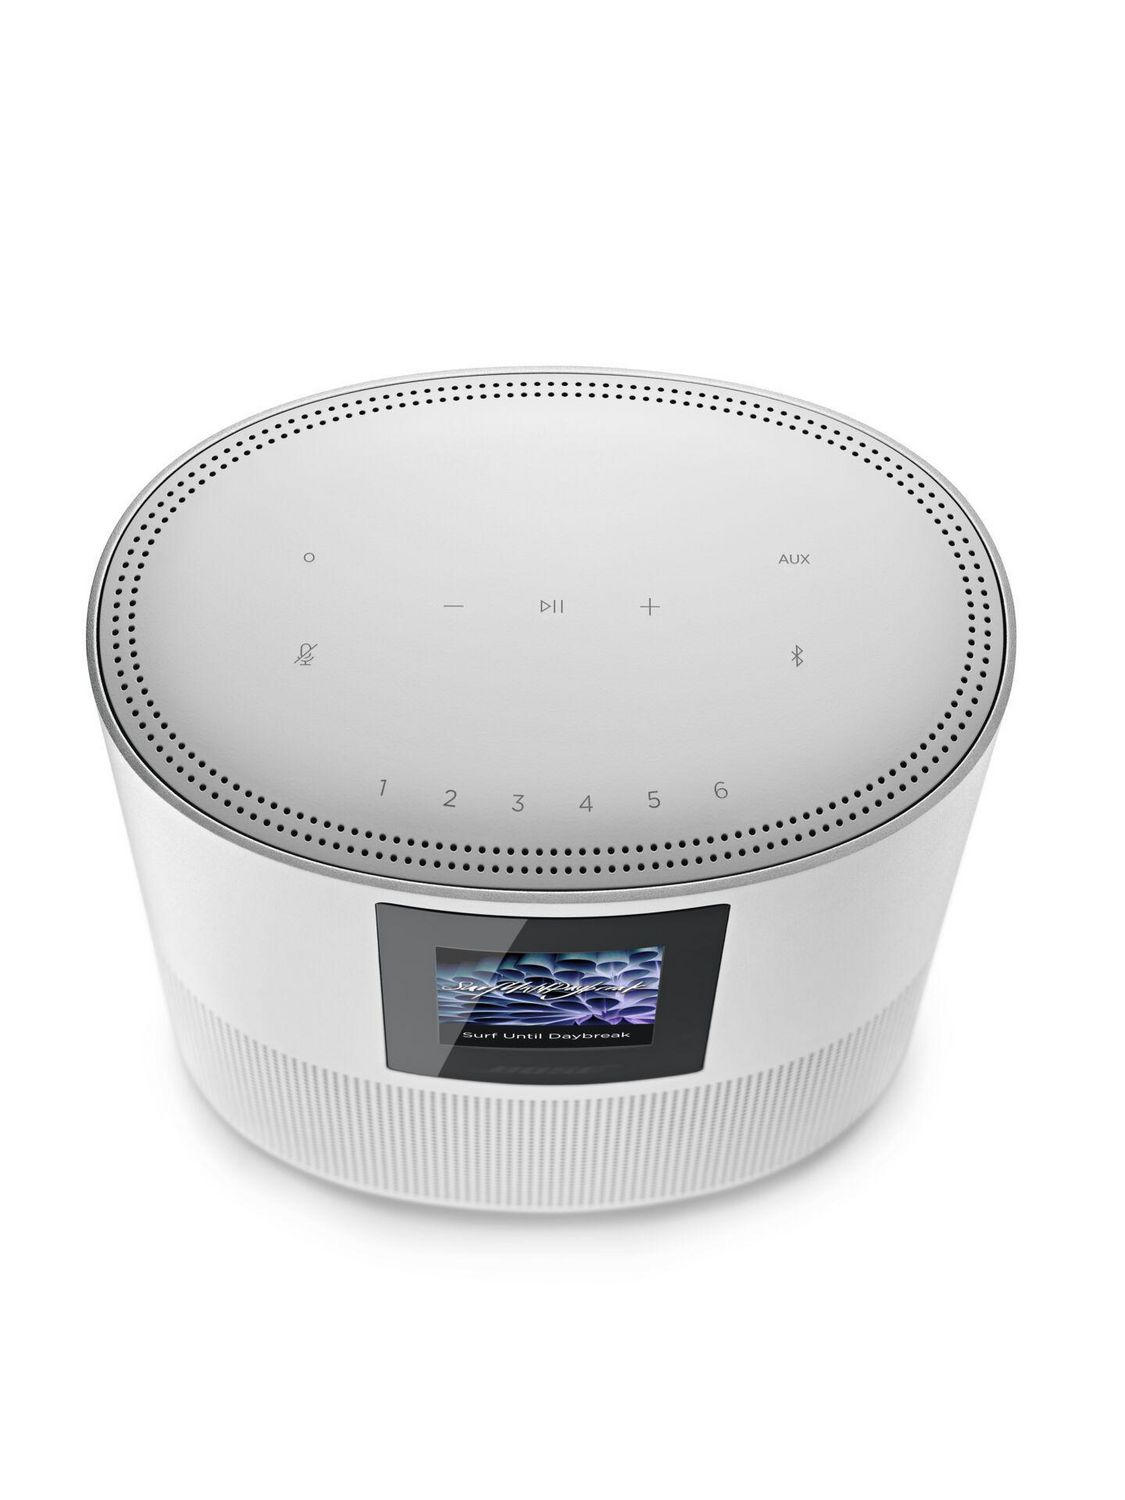 Bose Home Speaker 500 | Walmart Canada